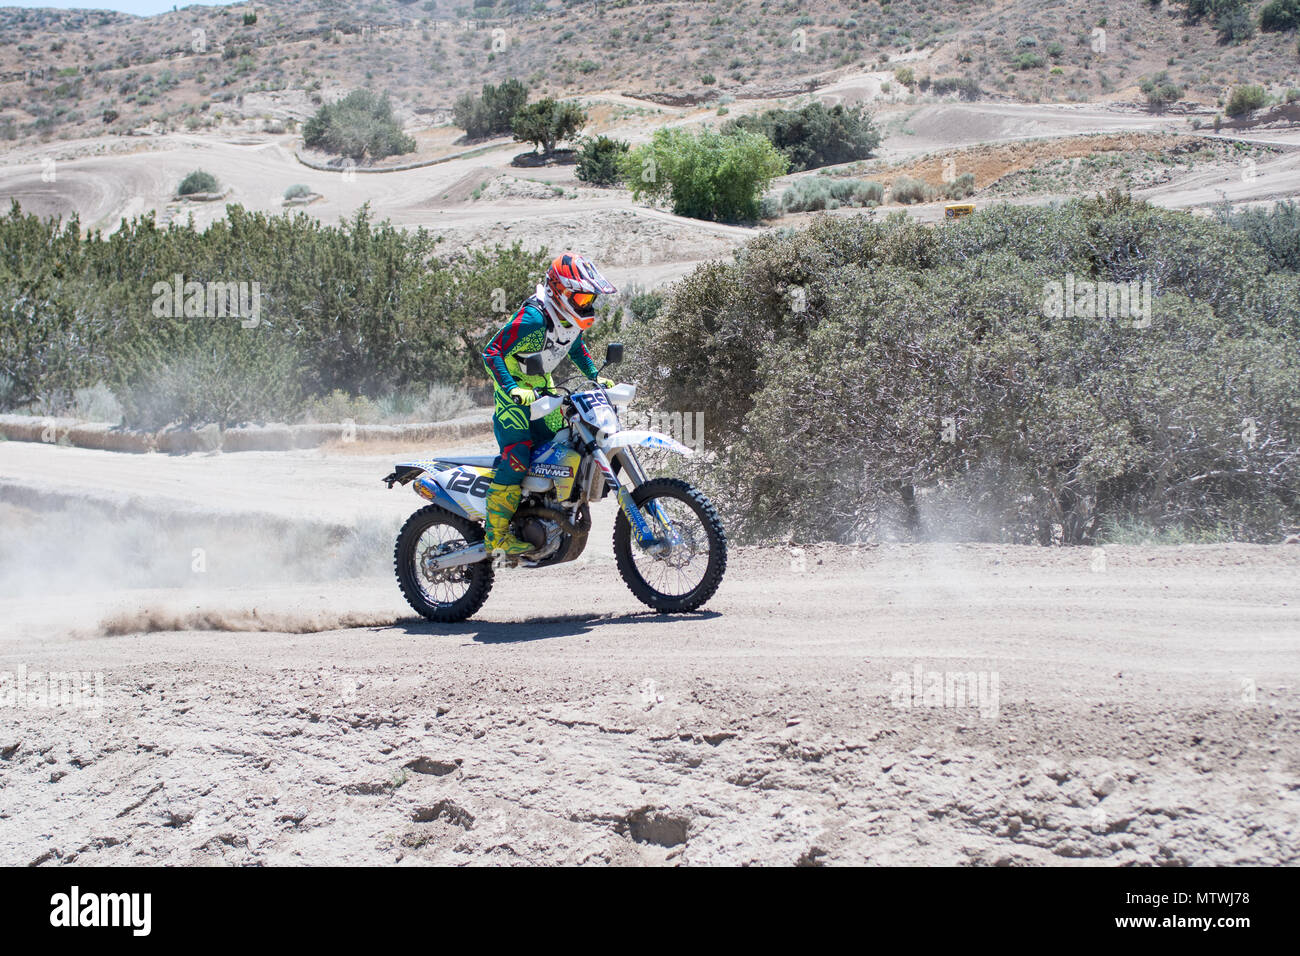 Motocross racing at California track Stock Photo Alamy